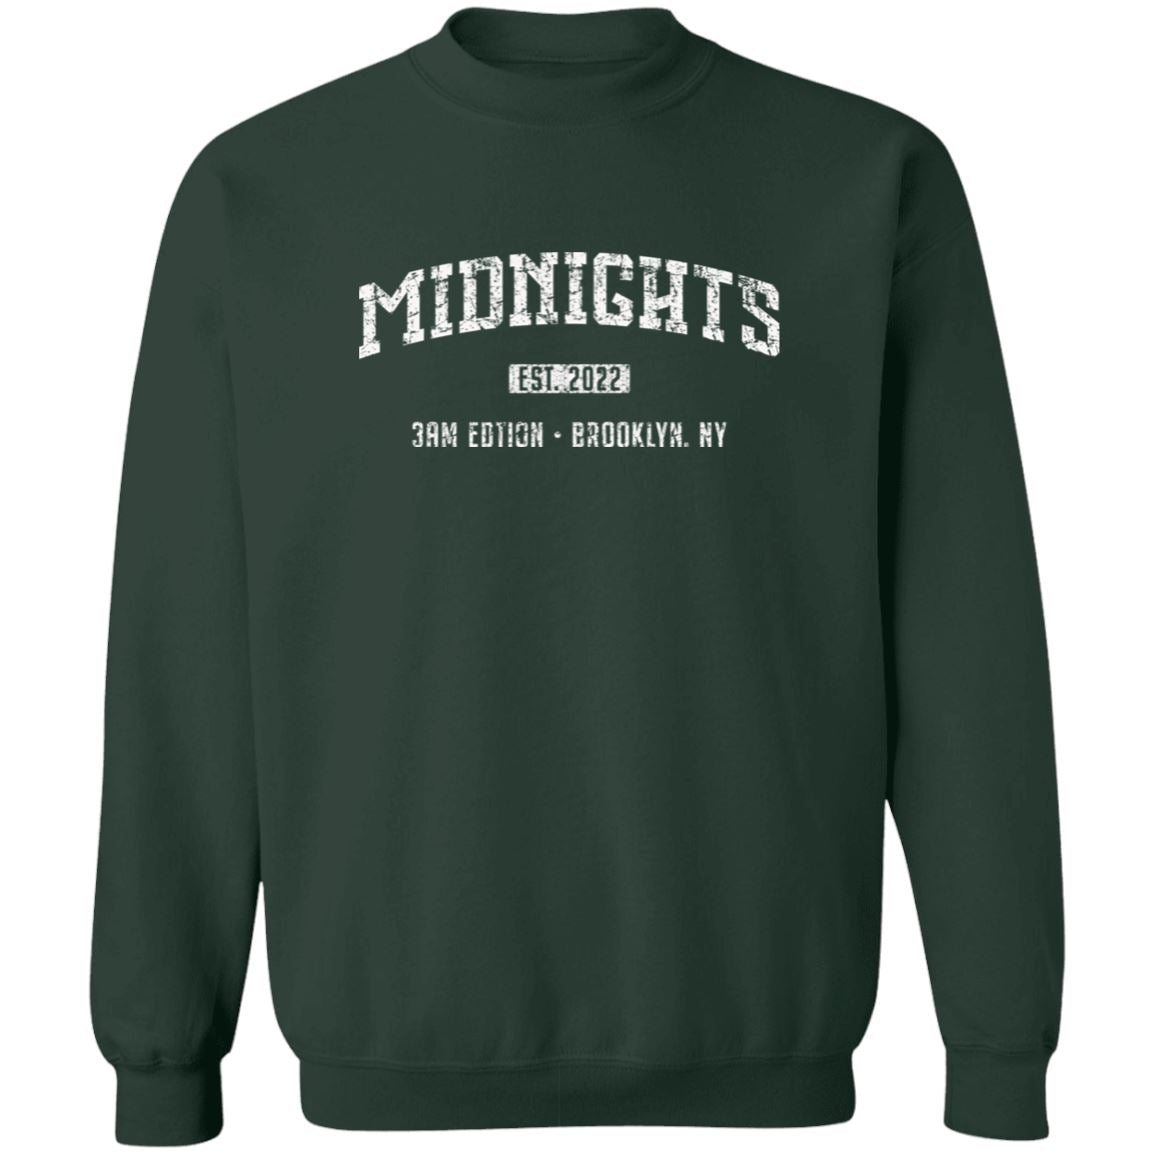 Midnights _Custom Cat Stock Items Sweatshirts CustomCat Forest Green S 